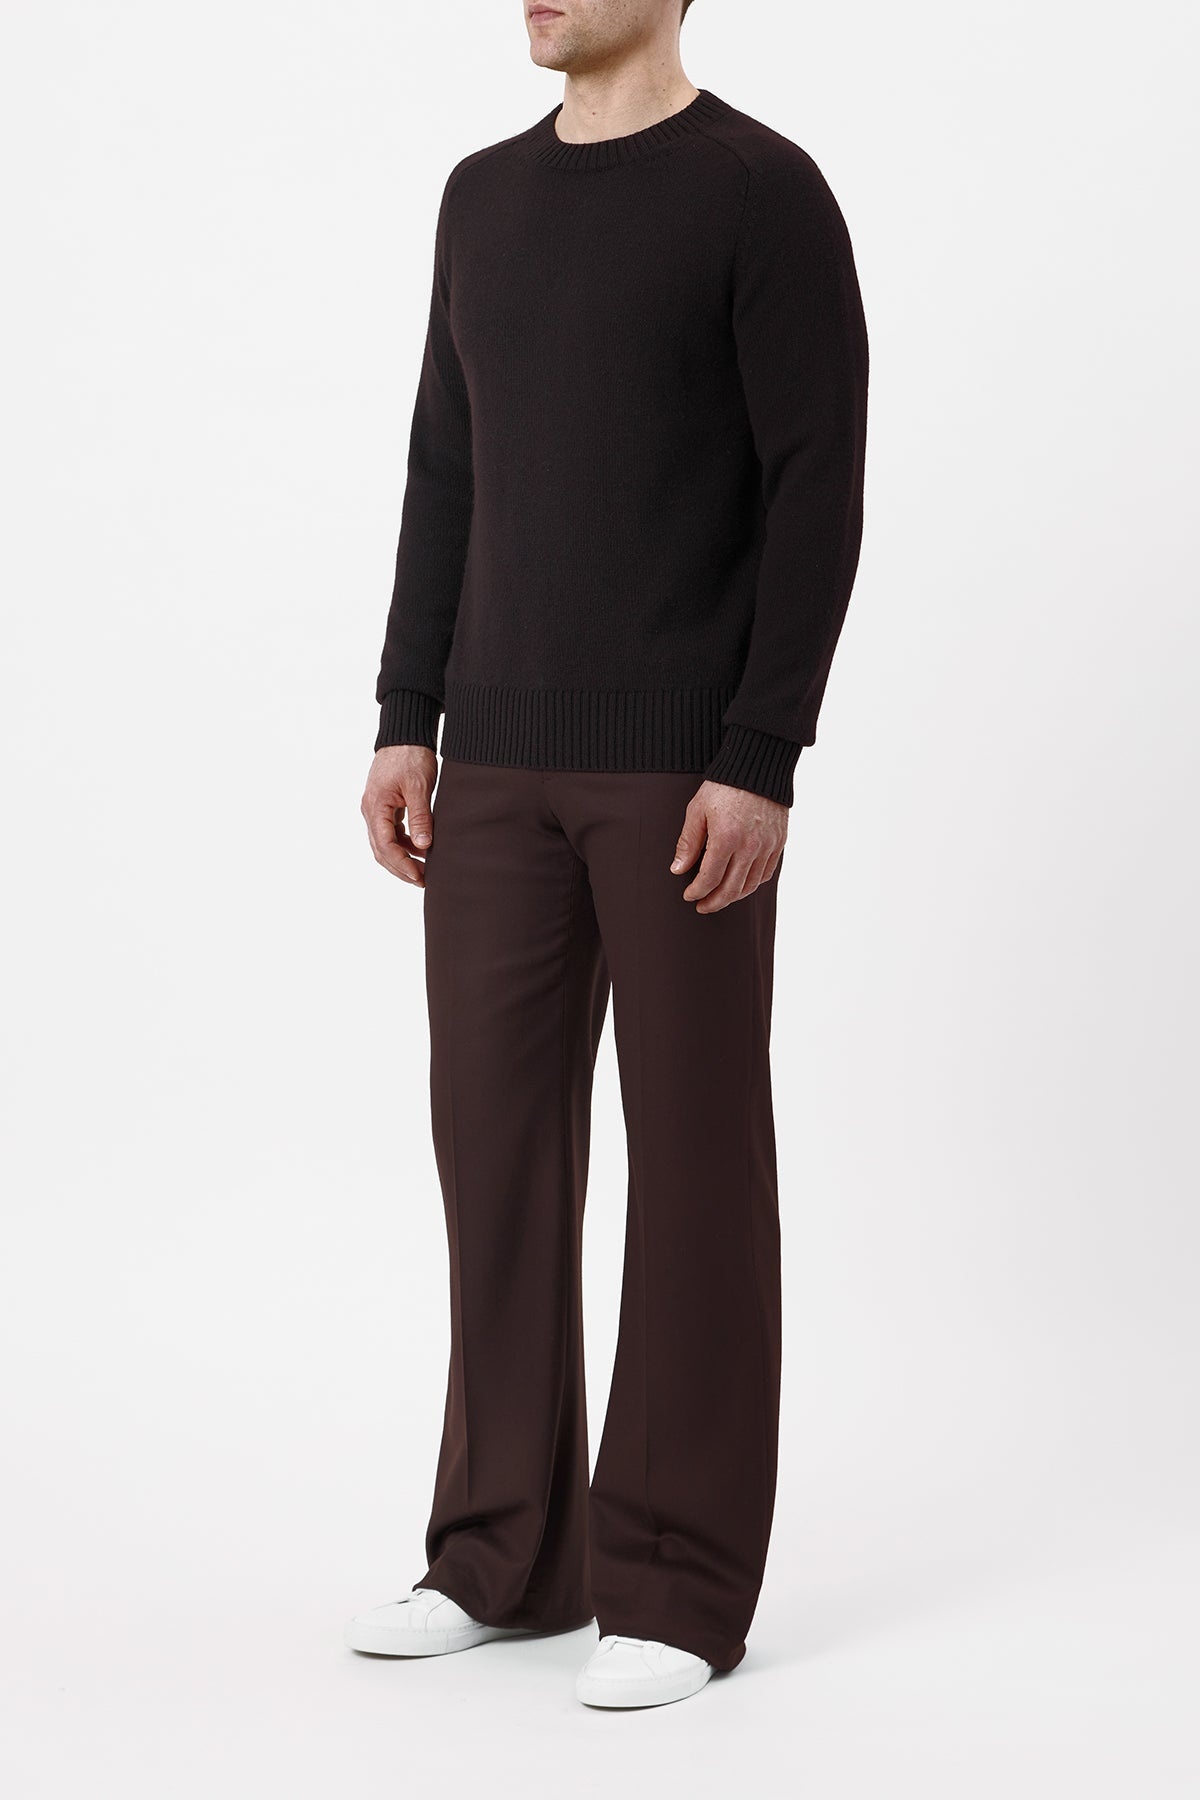 Daniel Knit Sweater in Chocolate Cashmere - 3